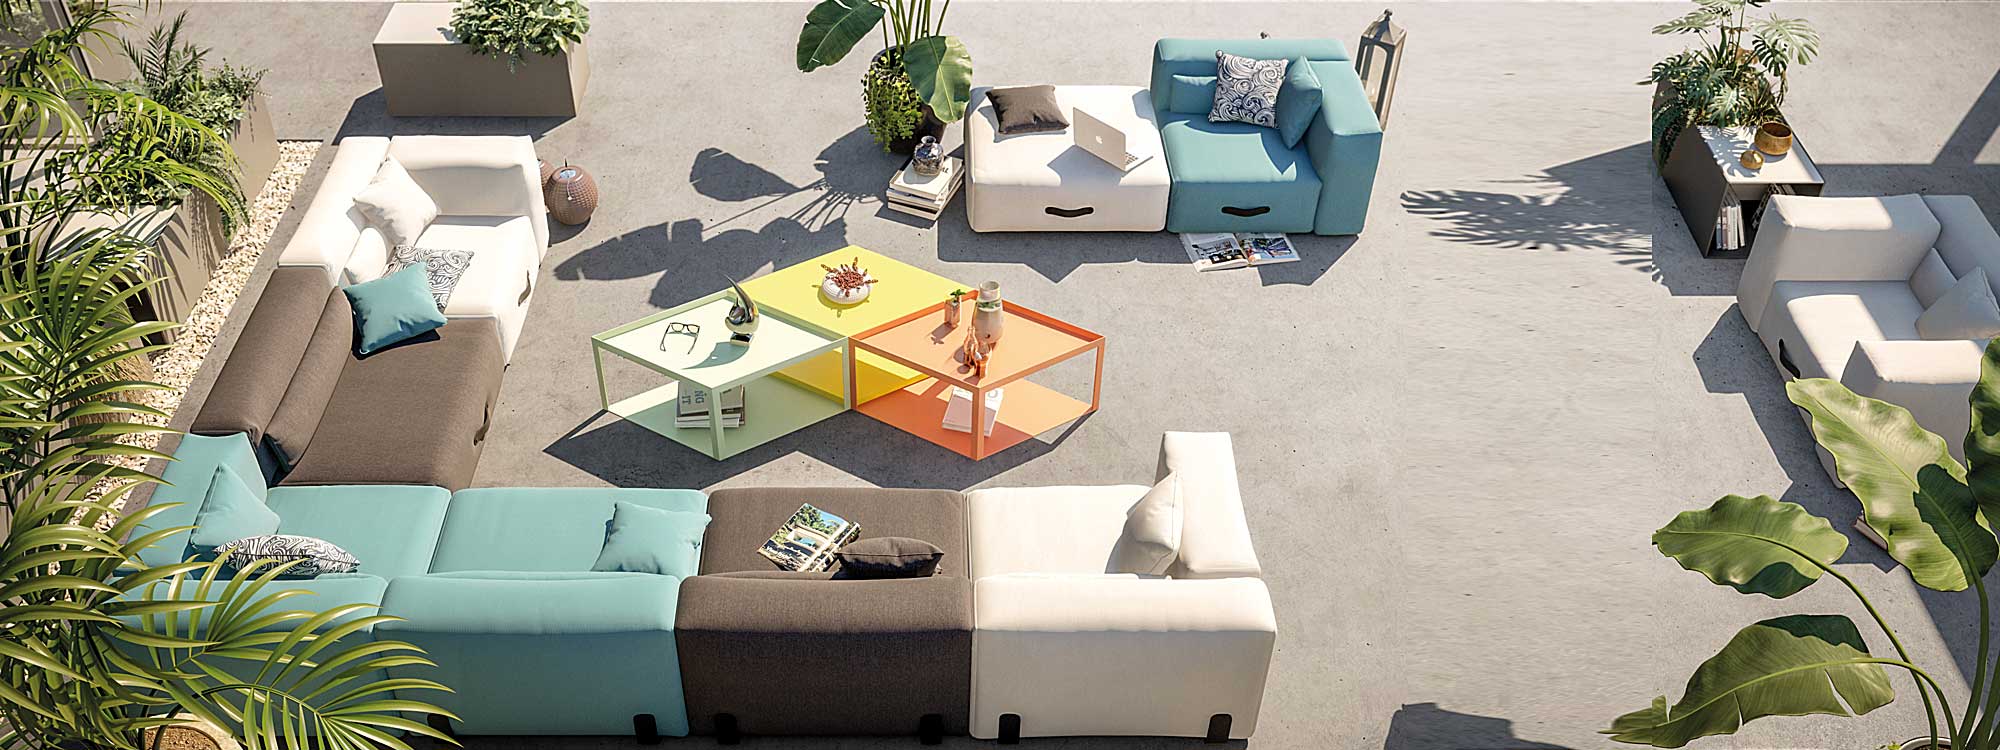 Image of birdseye view of Miami modular outdoor sofa and Karo modular low tables